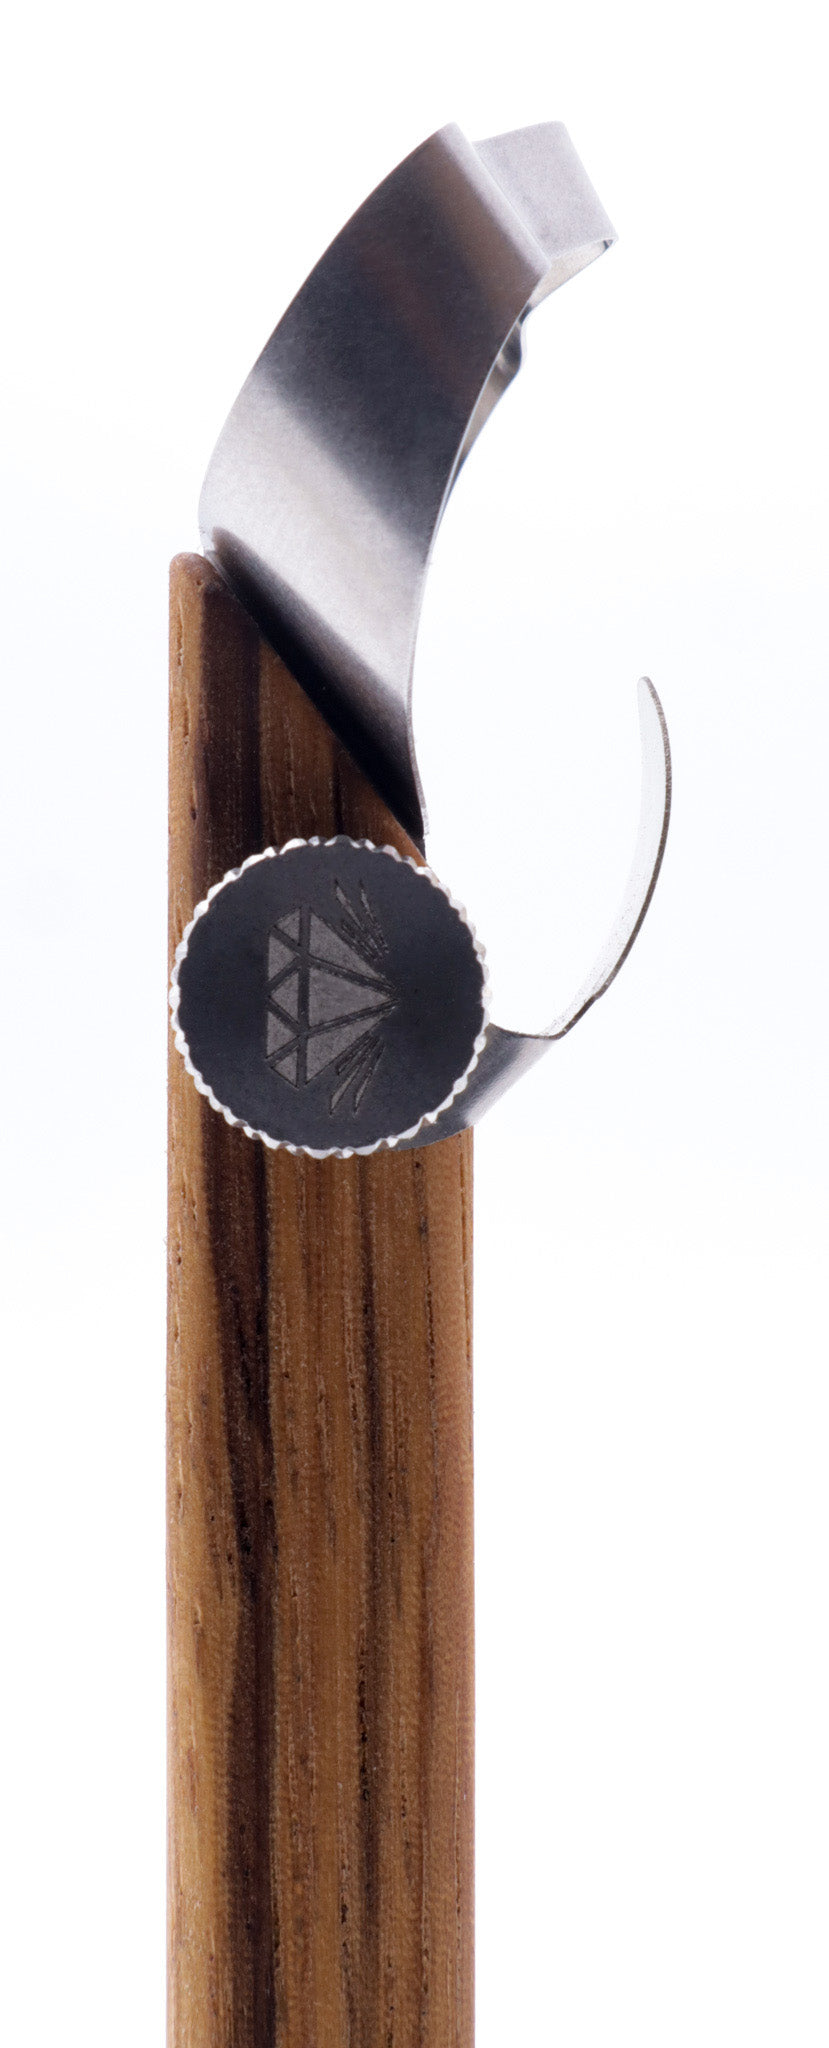 DiamondCore Tools - Sunrise XL Handheld Clay Extruder (R201)